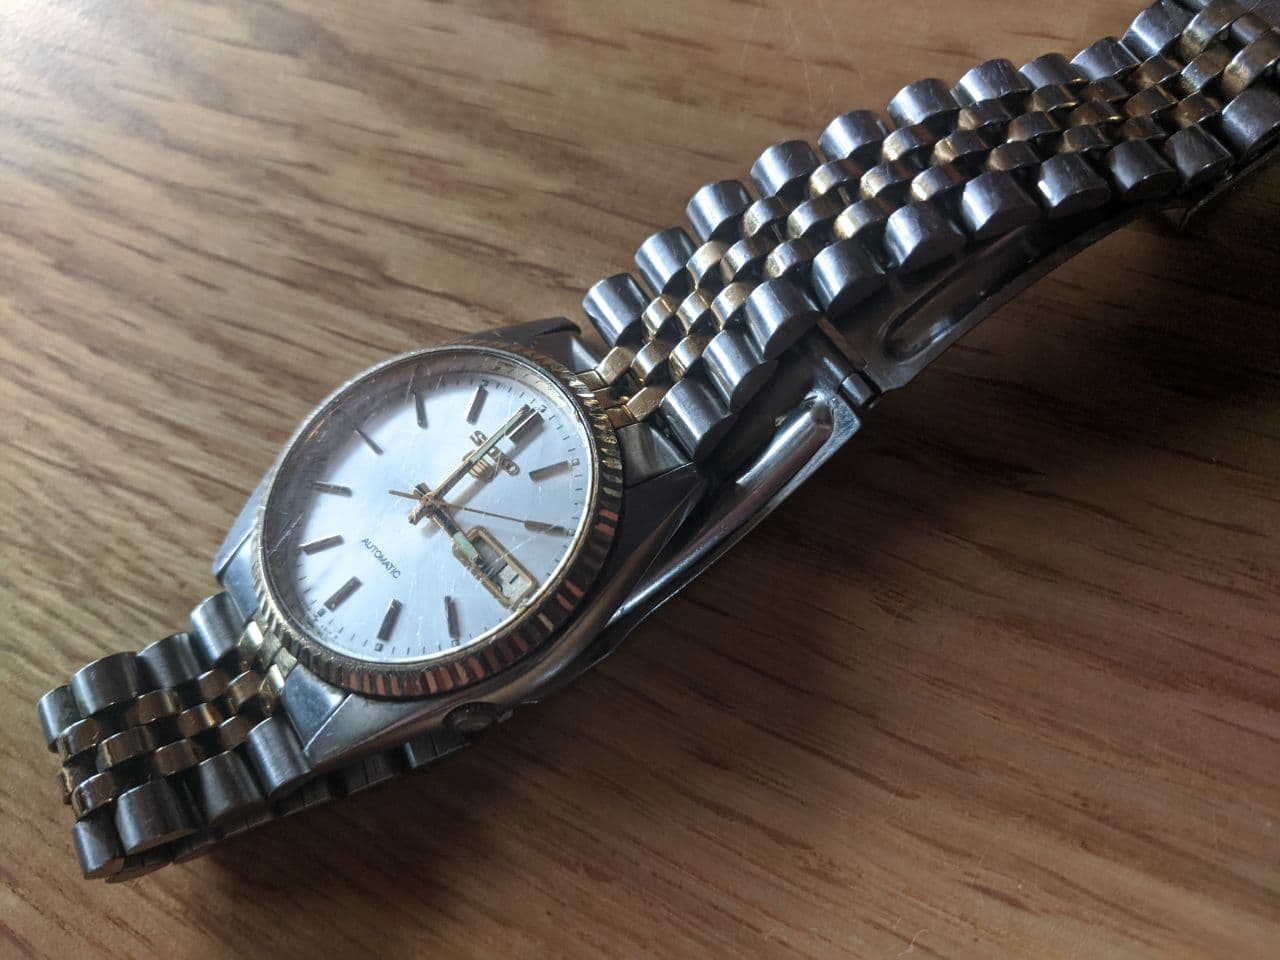 Watch Service UK, Seiko Date Just before repair - Broken Watch